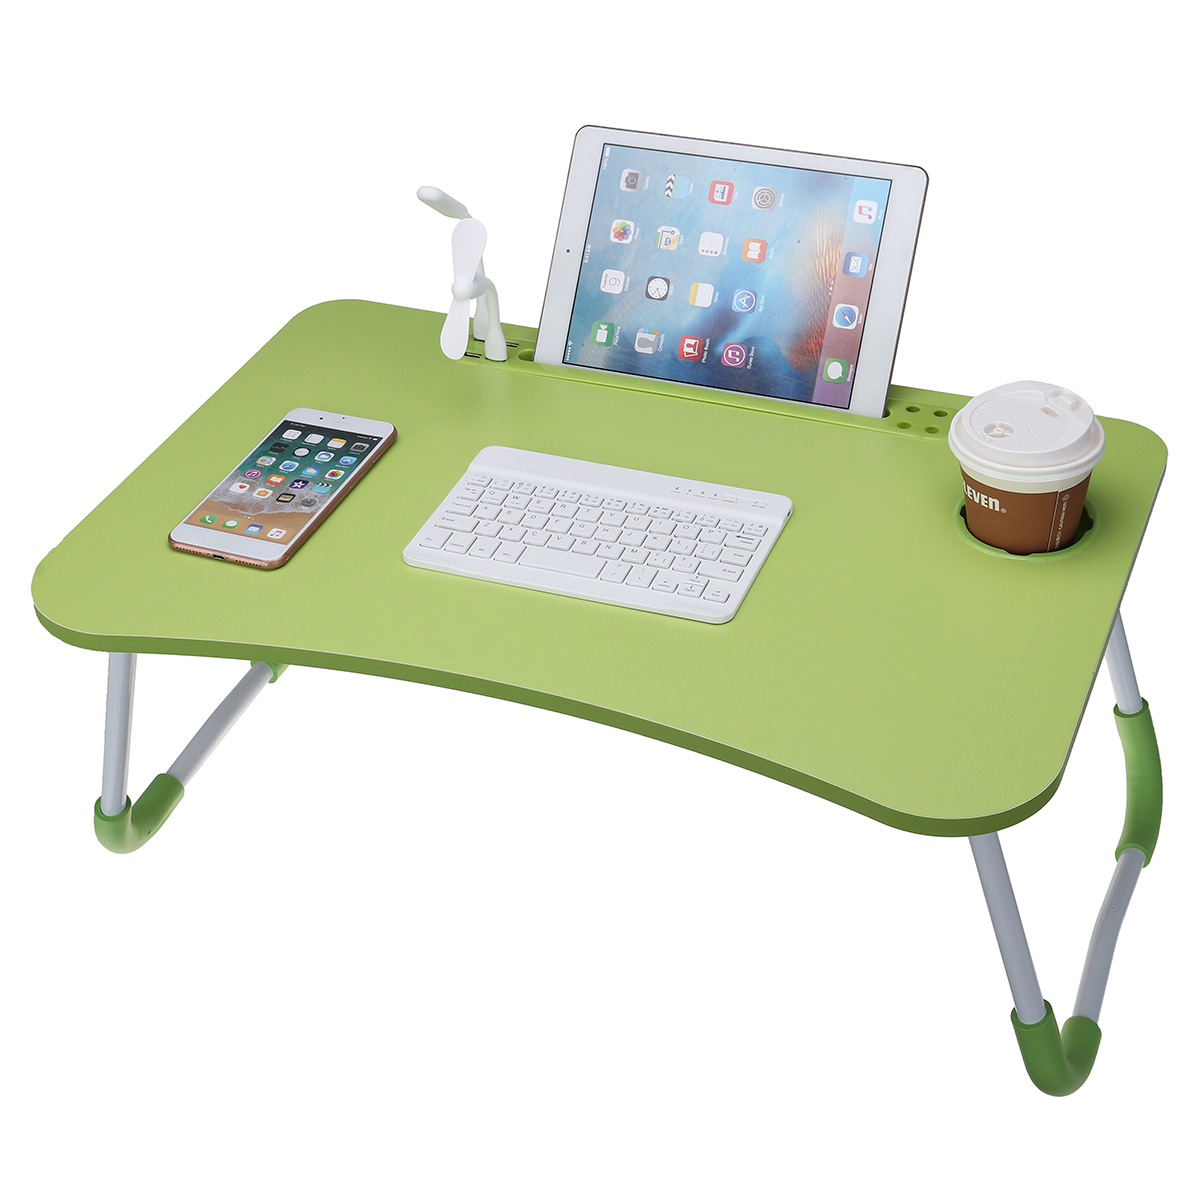 USB-Computer-Desk-Multifunctional-Portable-Bed-Computer-Desk-Lazy-Foldable-Lazy-Laptop-Table-for-Hom-1776388-14